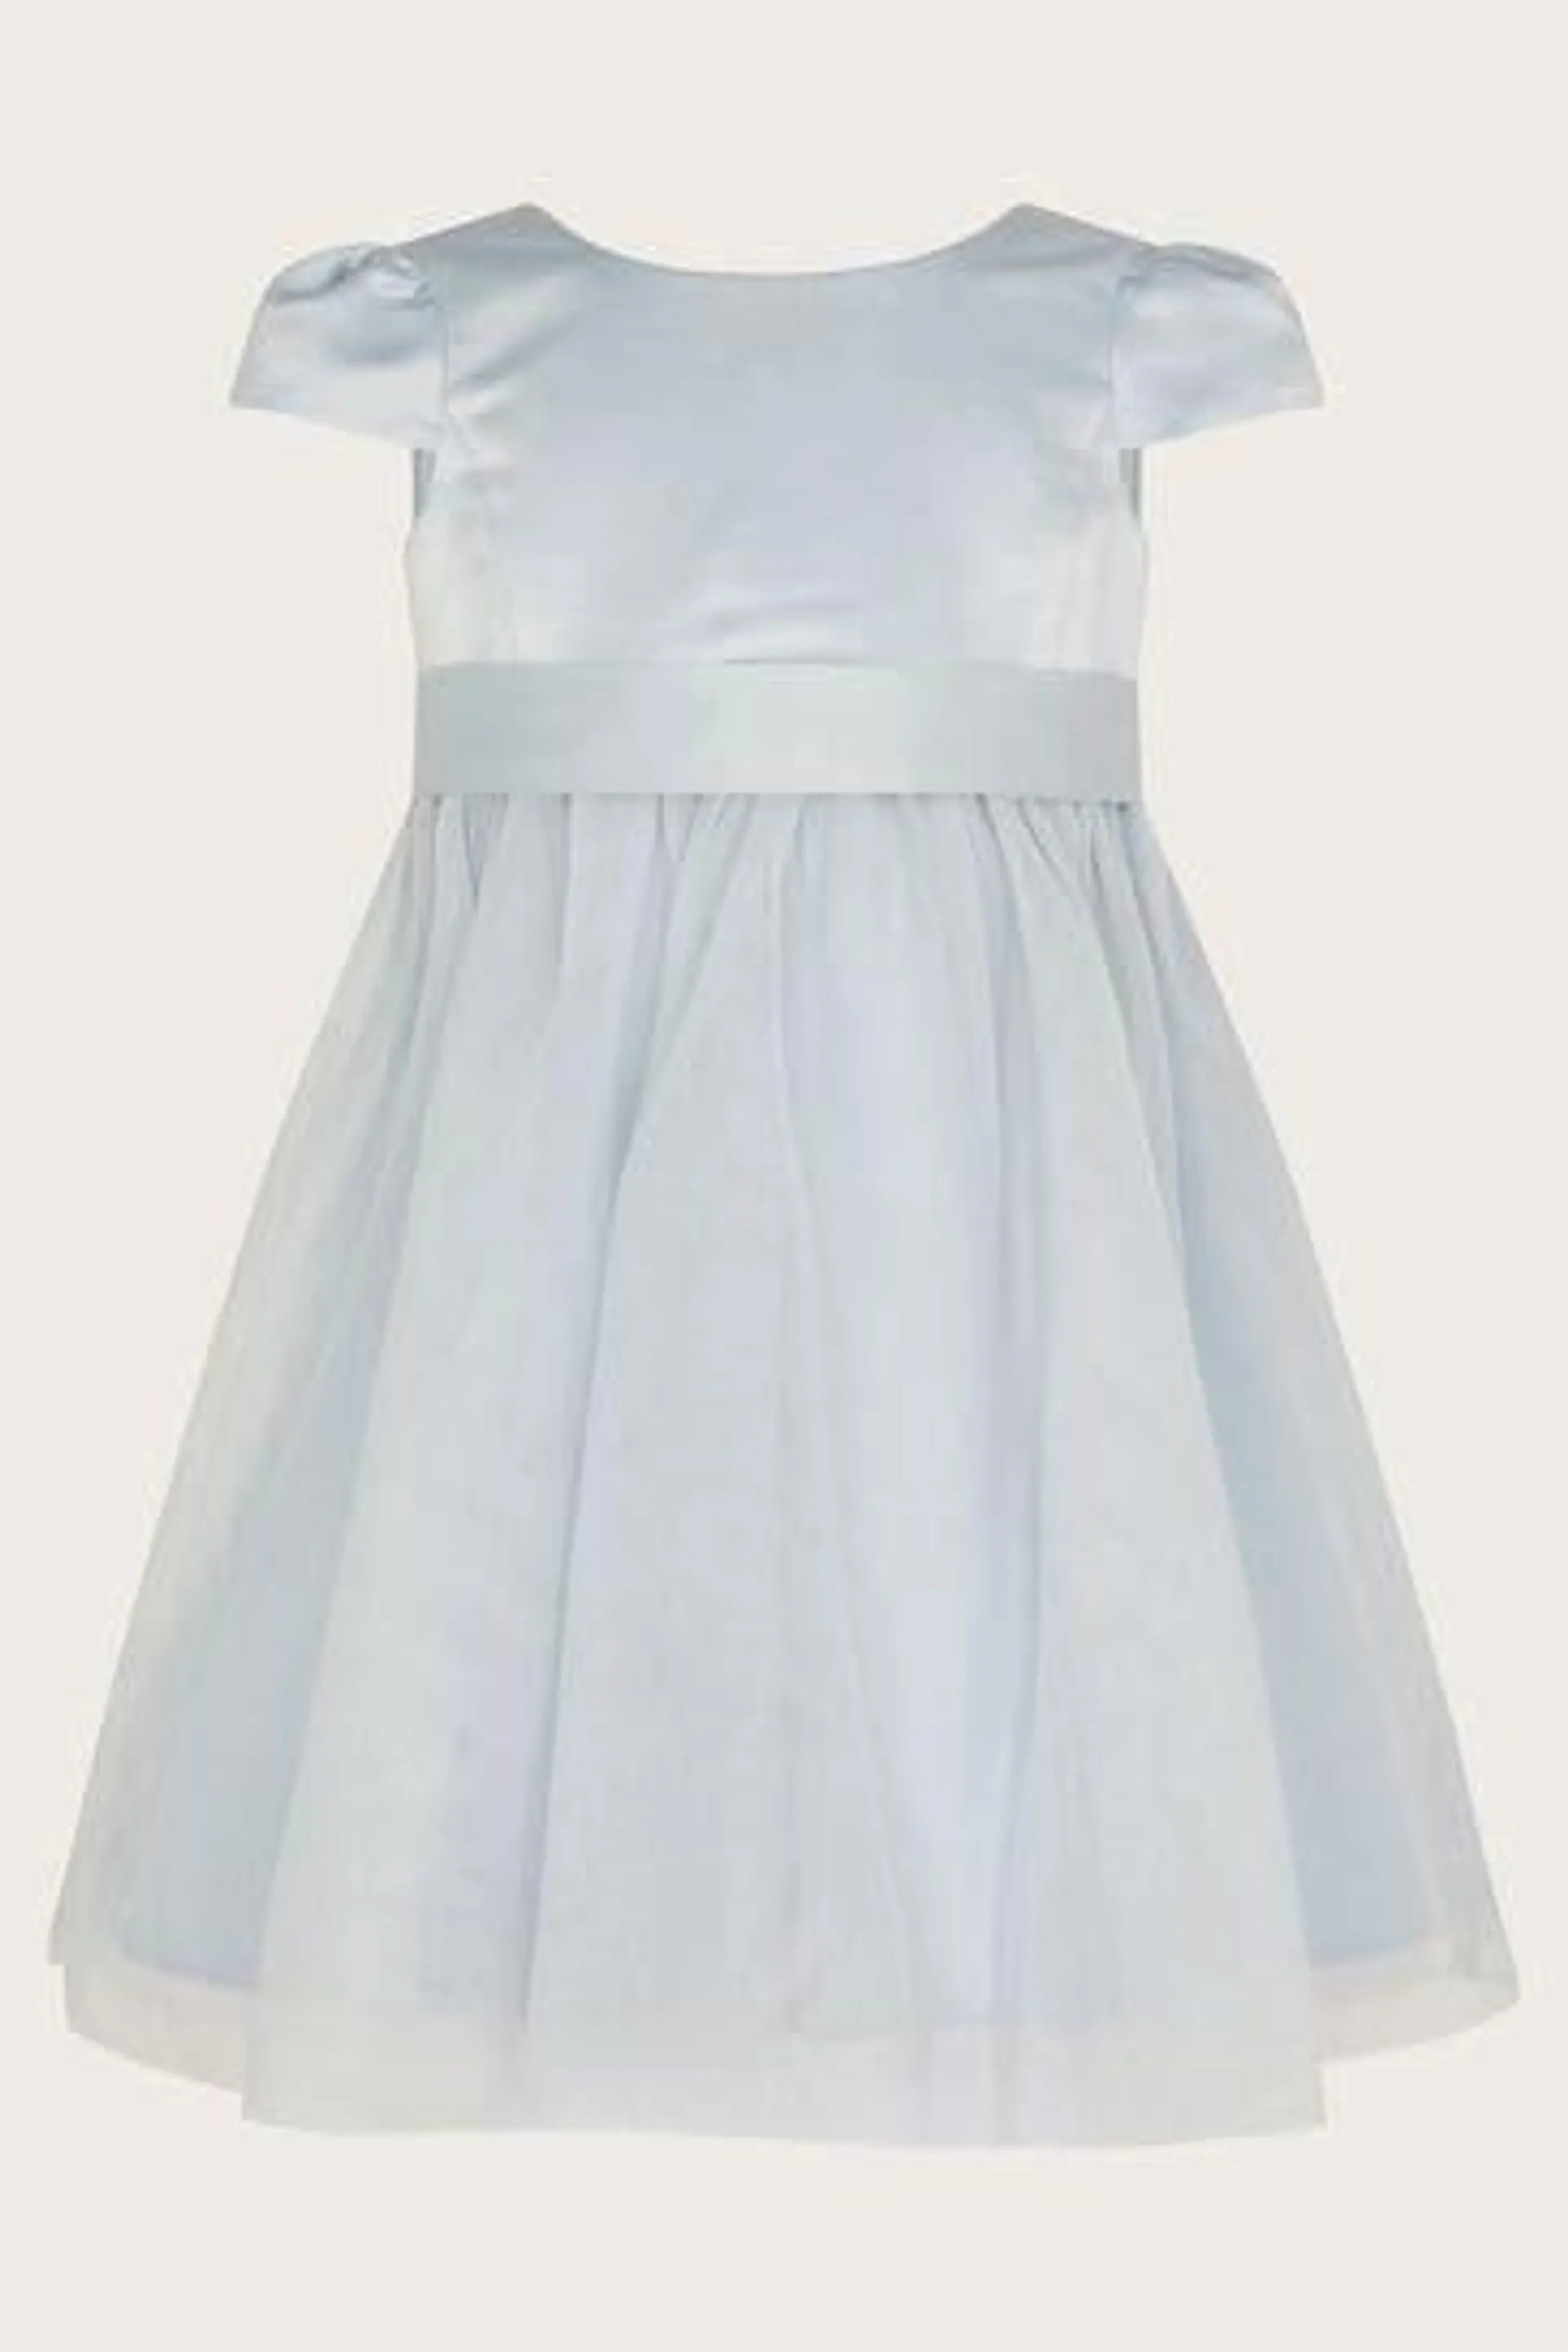 Monsoon Tulle Baby Bridesmaid Dress